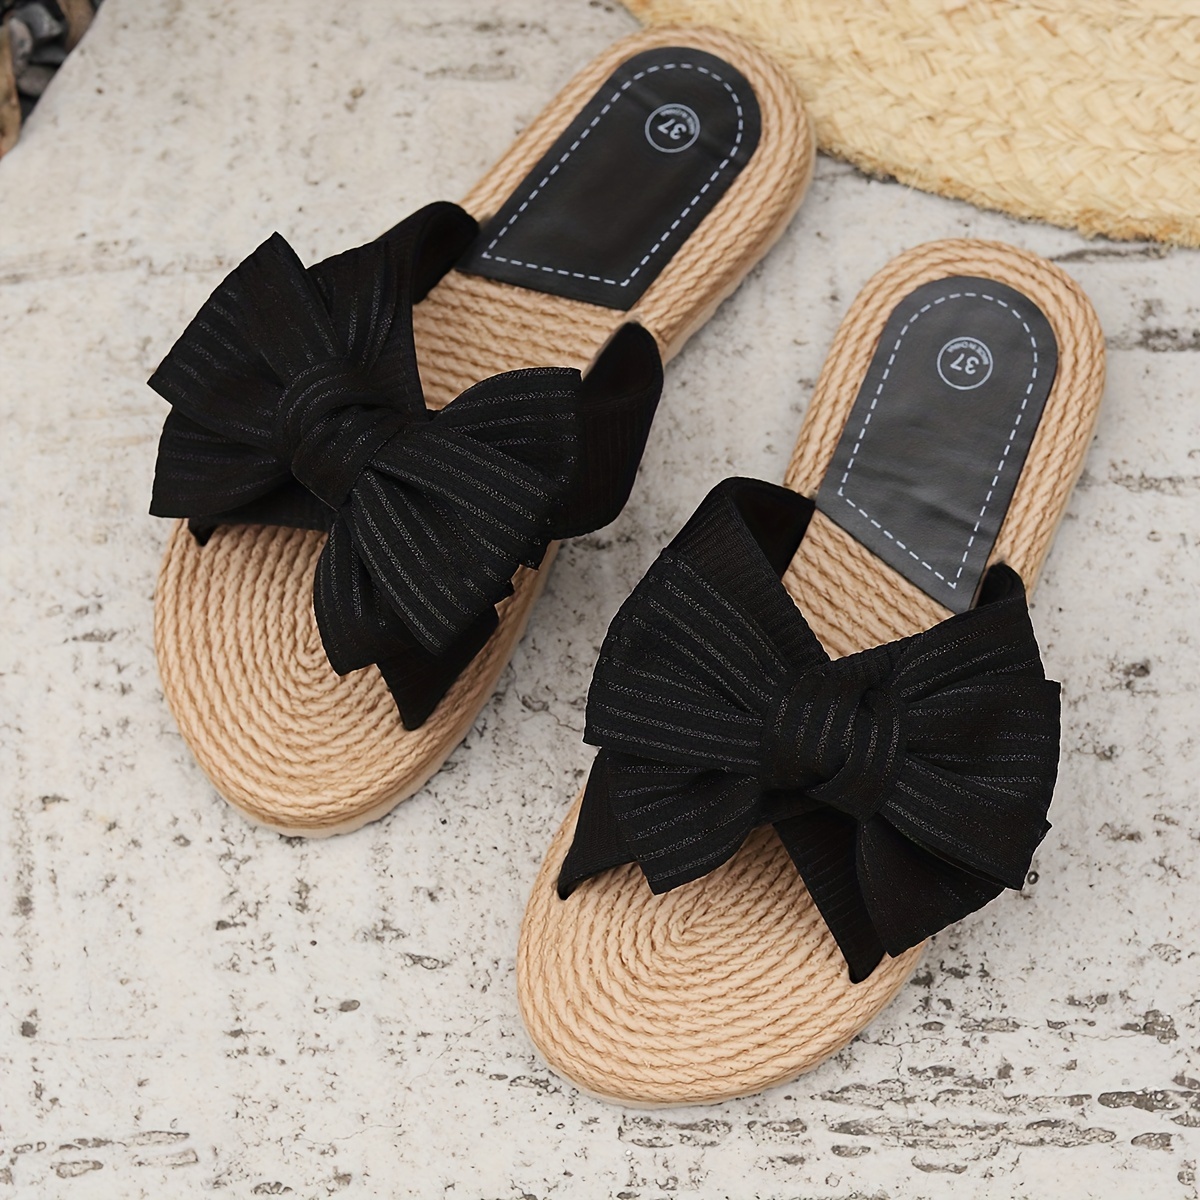 

Women's Fashionable Bowknot Sandals, Slip On Lightweight Flat Beach Footwear, Elegant Style For Summer Vacation